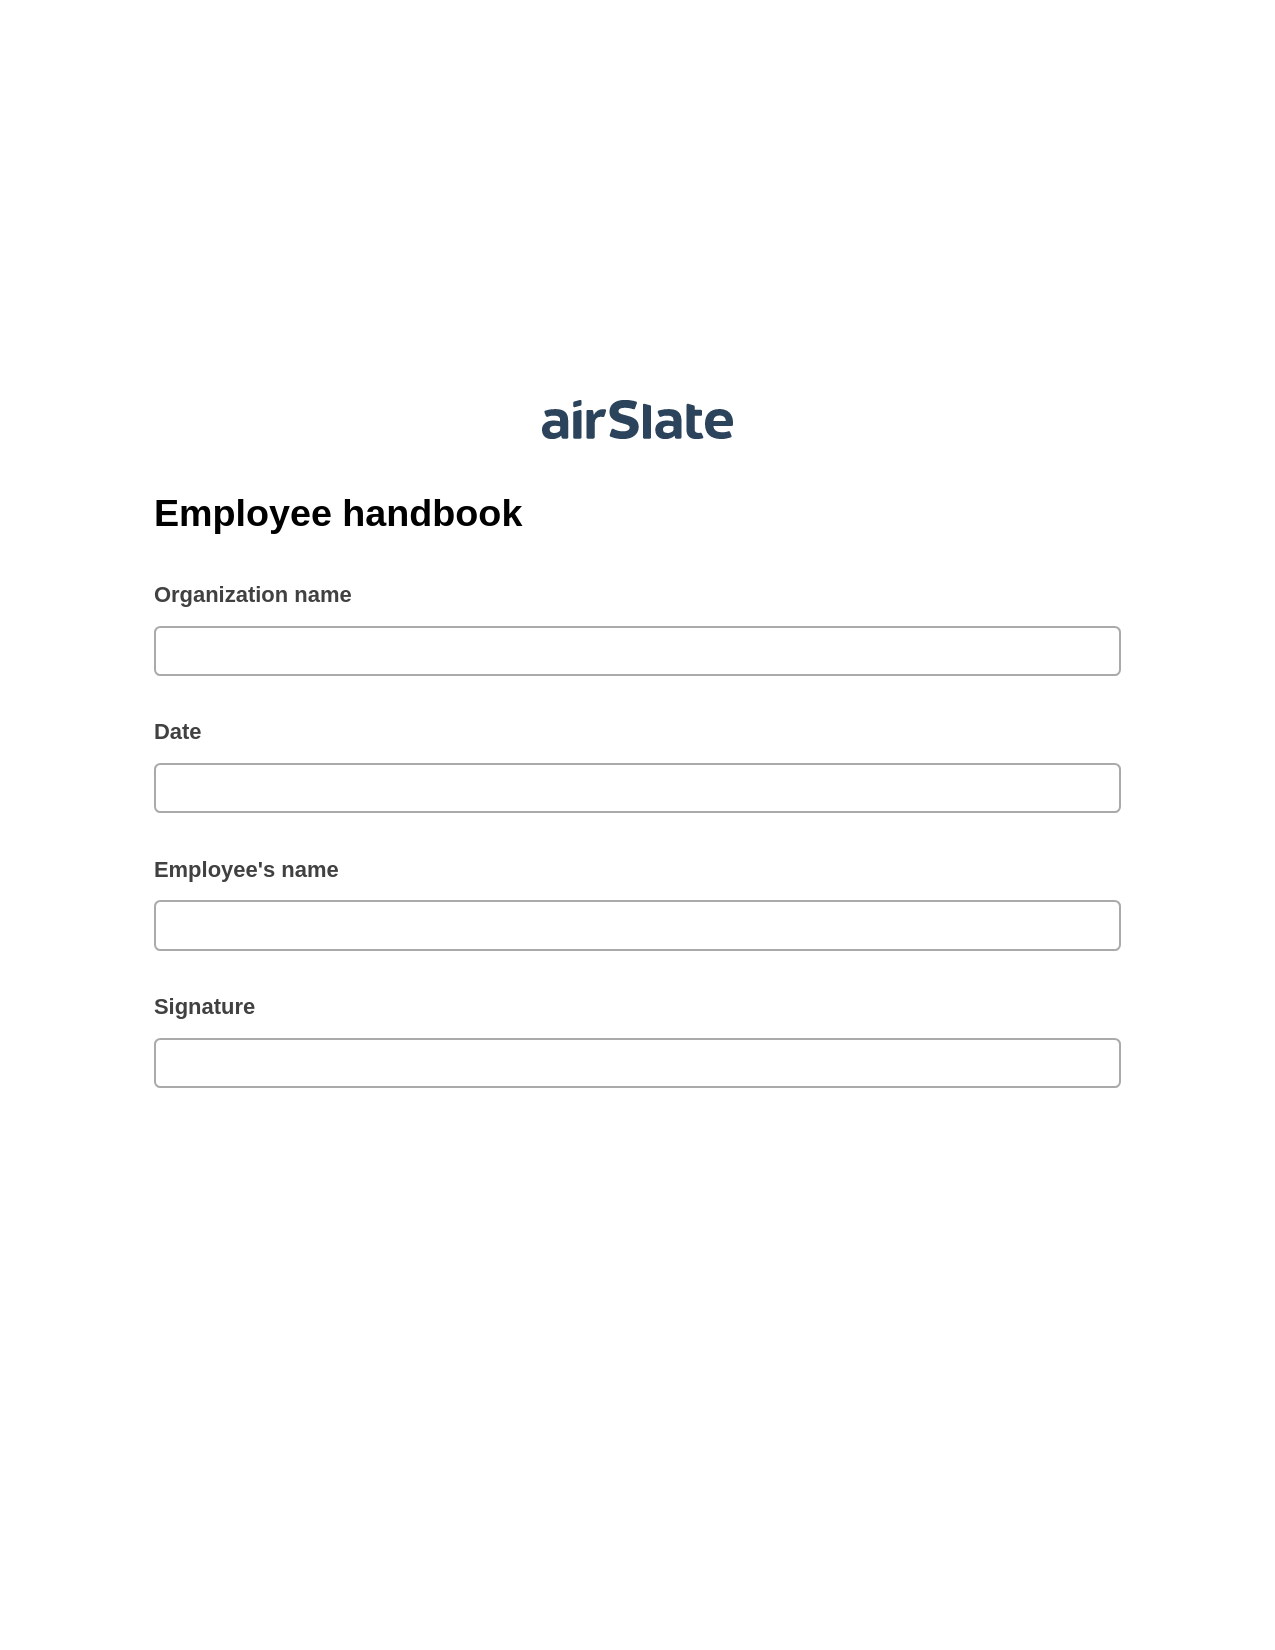 Multirole Employee handbook Pre-fill Slate from MS Dynamics 365 Records Bot, Pre-fill with Custom Data Bot, Webhook Postfinish Bot